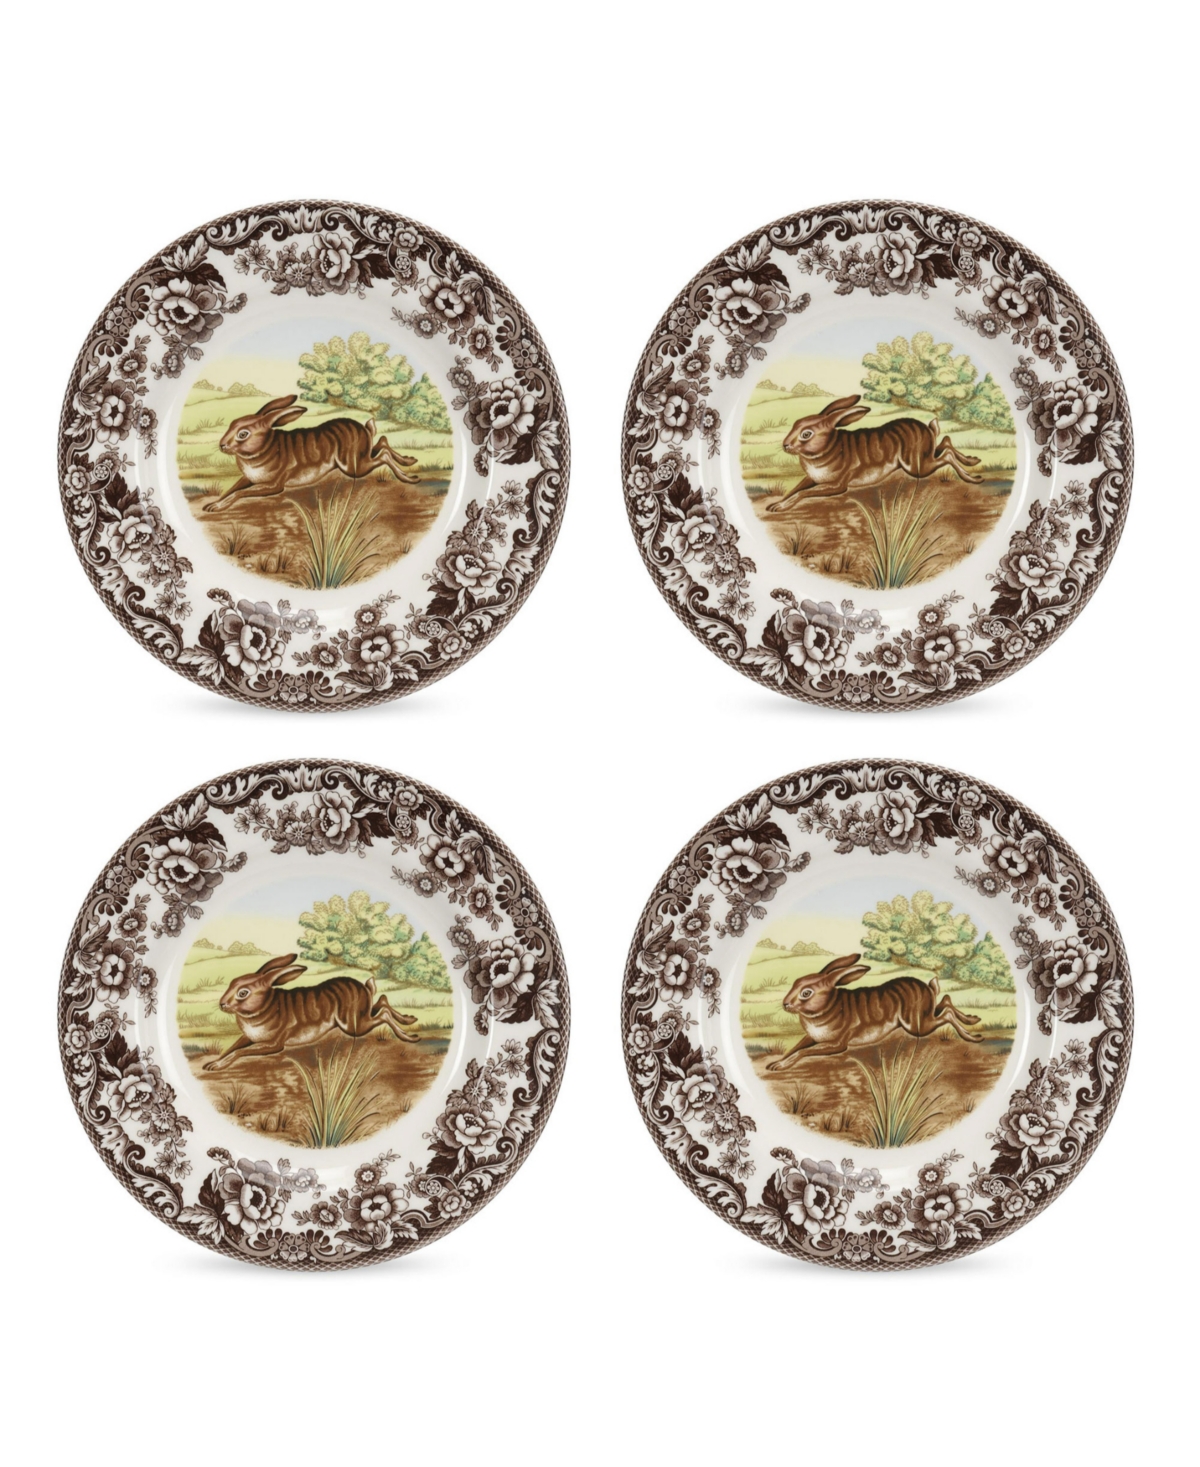 Woodland Rabbit 4 Piece Dinner Plates, Service for 4 - Brown